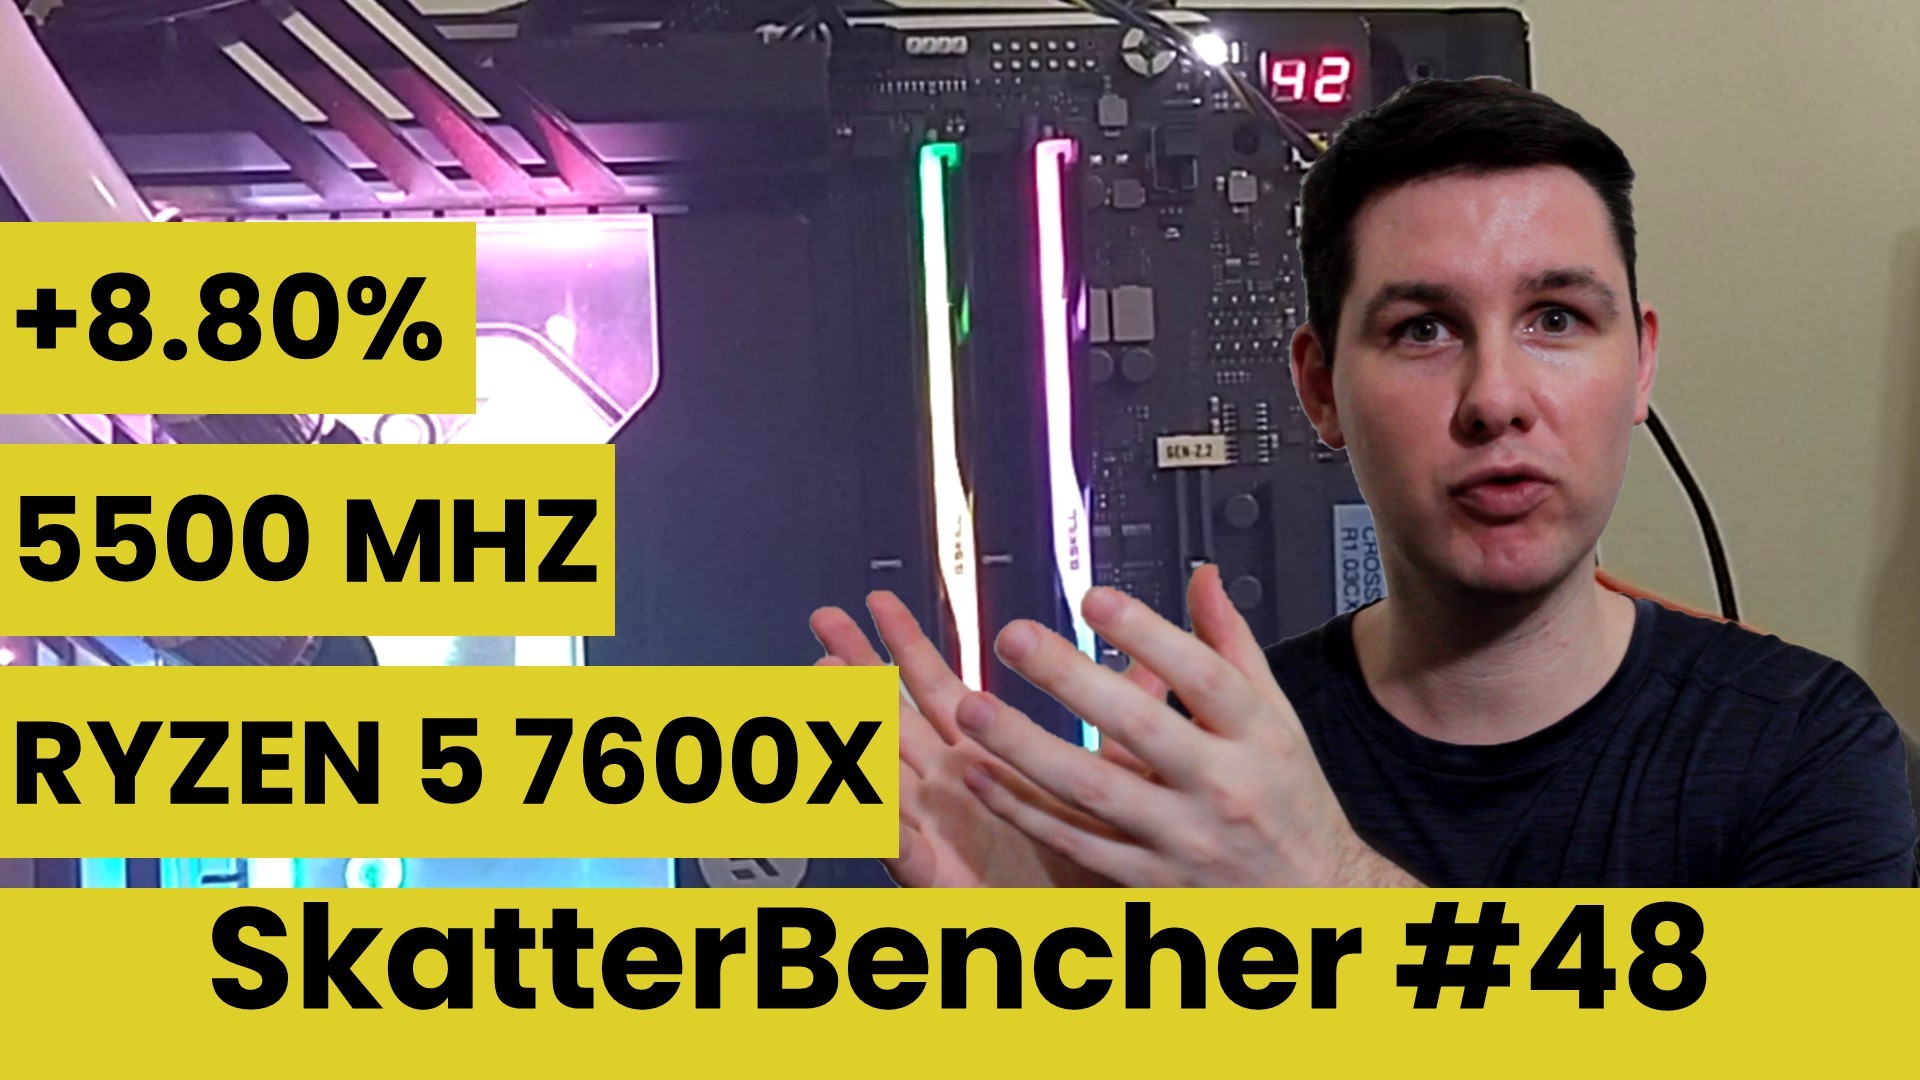 SkatterBencher #24: AMD Ryzen 7 5700G Overclocked to 4850 MHz